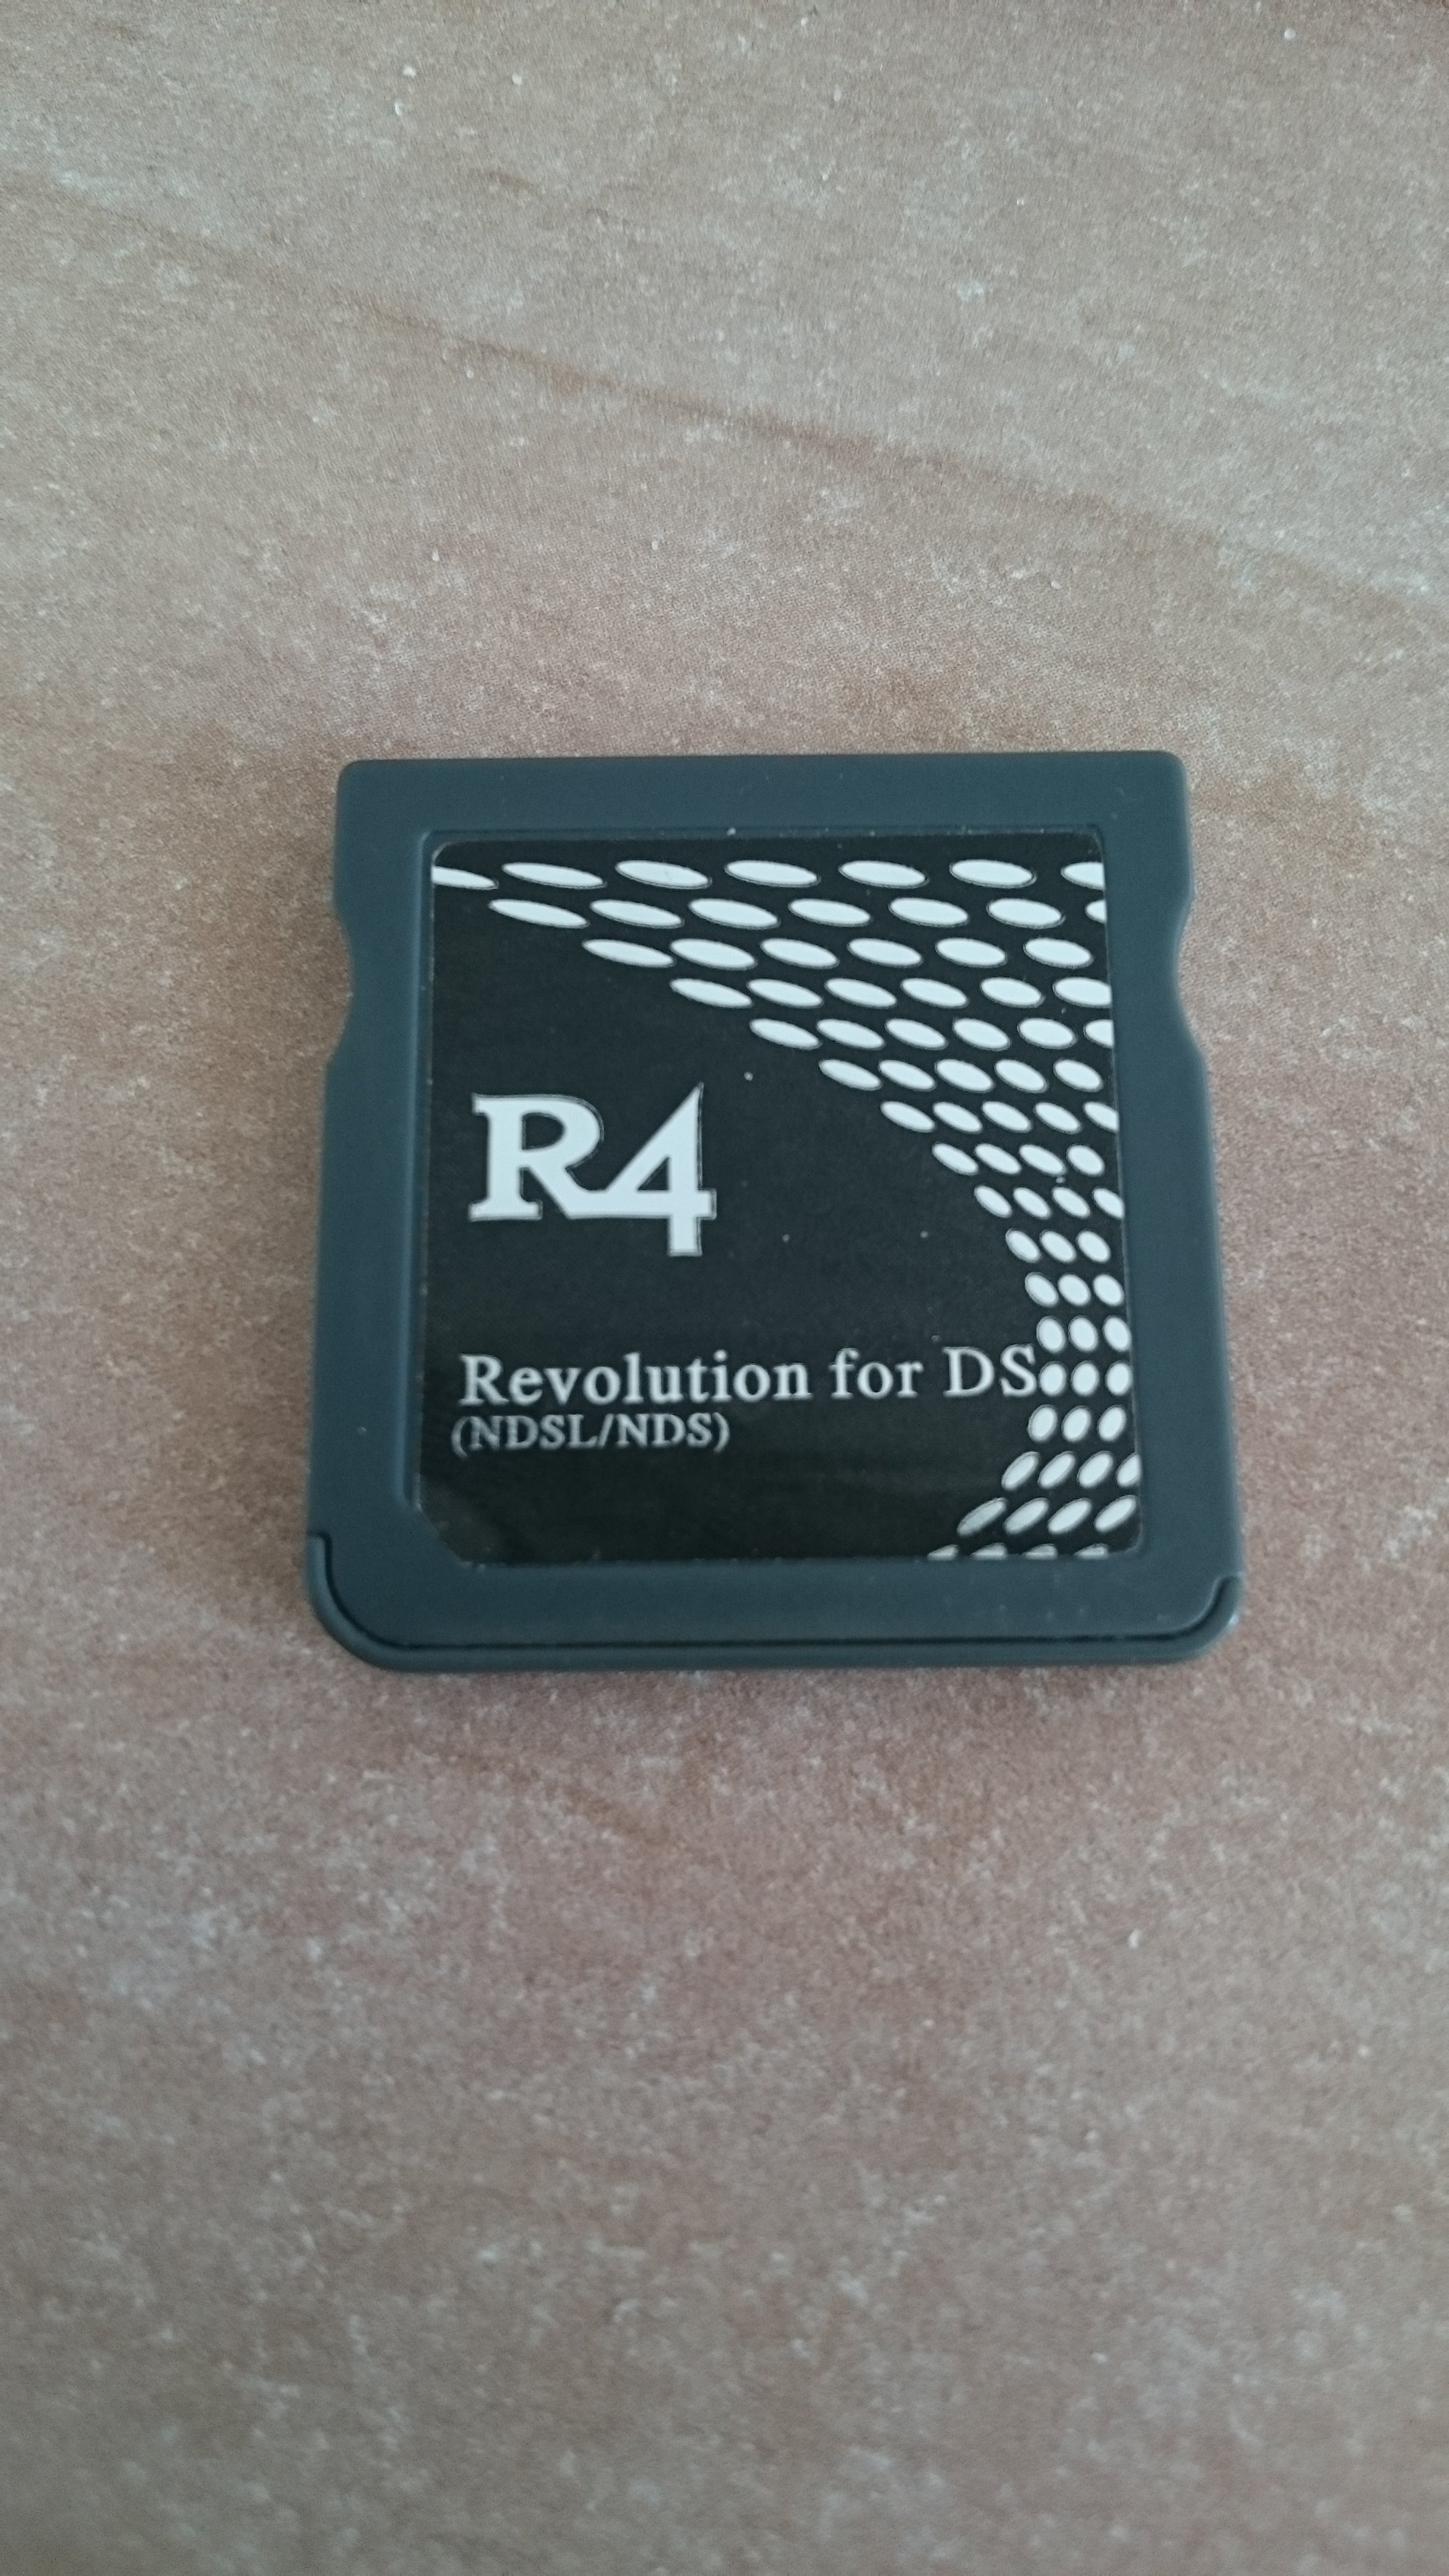 R4 revolution | GBAtemp.net - The Independent Video Game Community